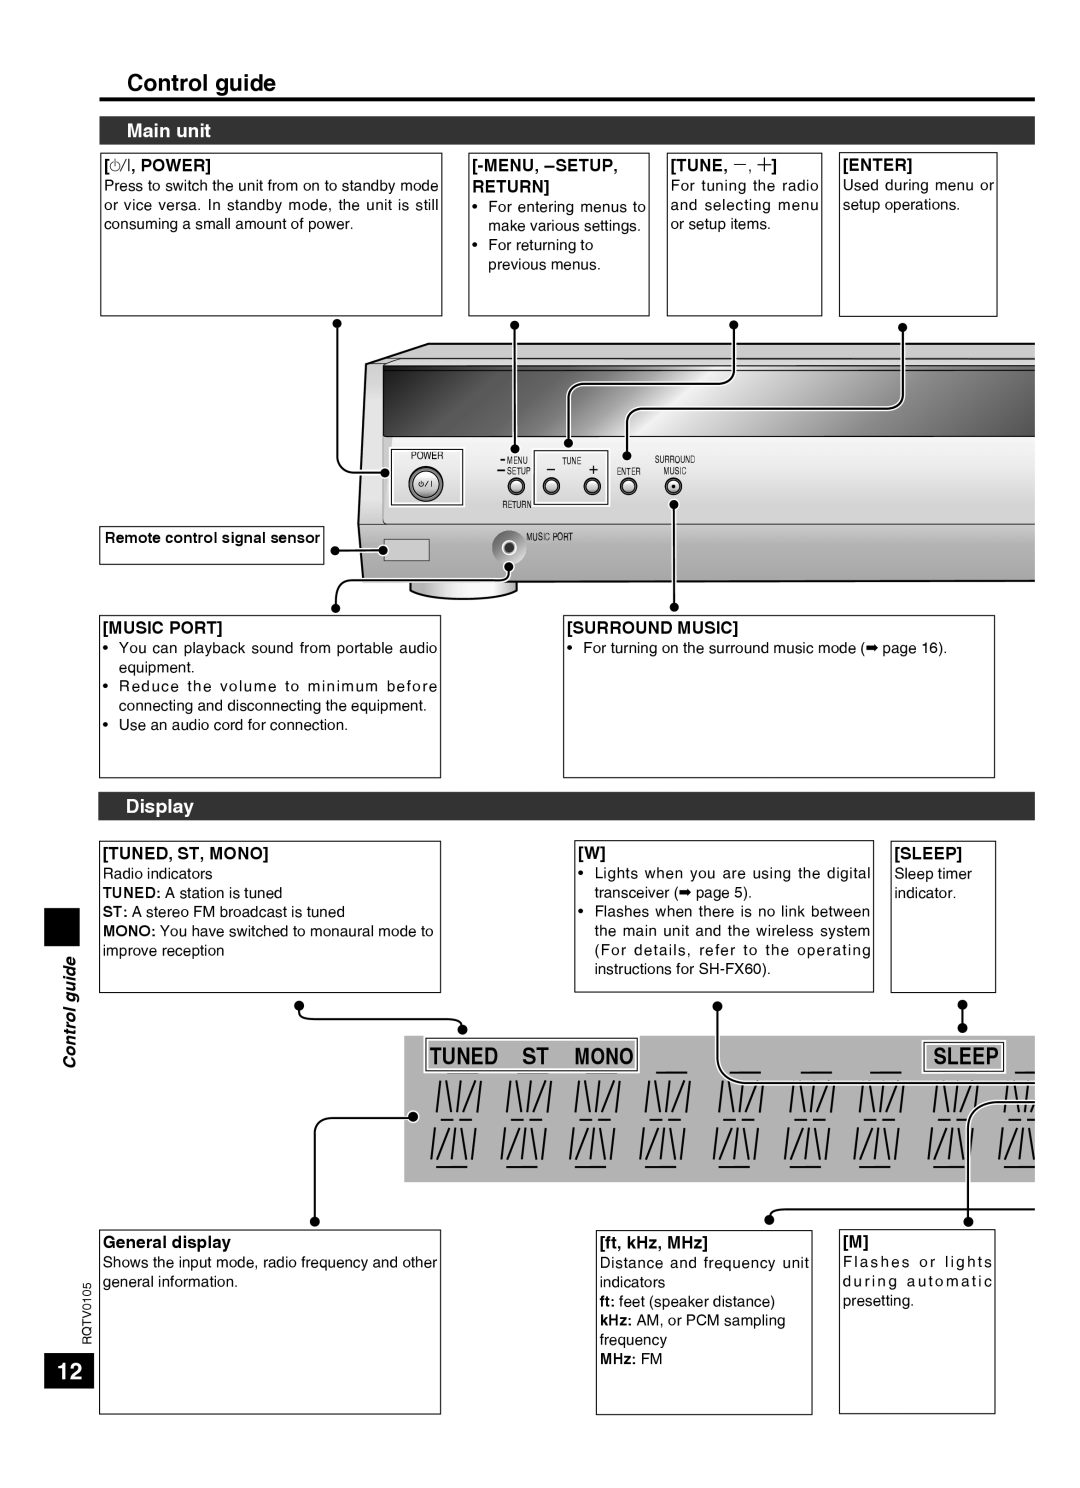 Panasonic SC-HT40 specifications Control guide, Tuned St Mono, Sleep, Main unit, Display 